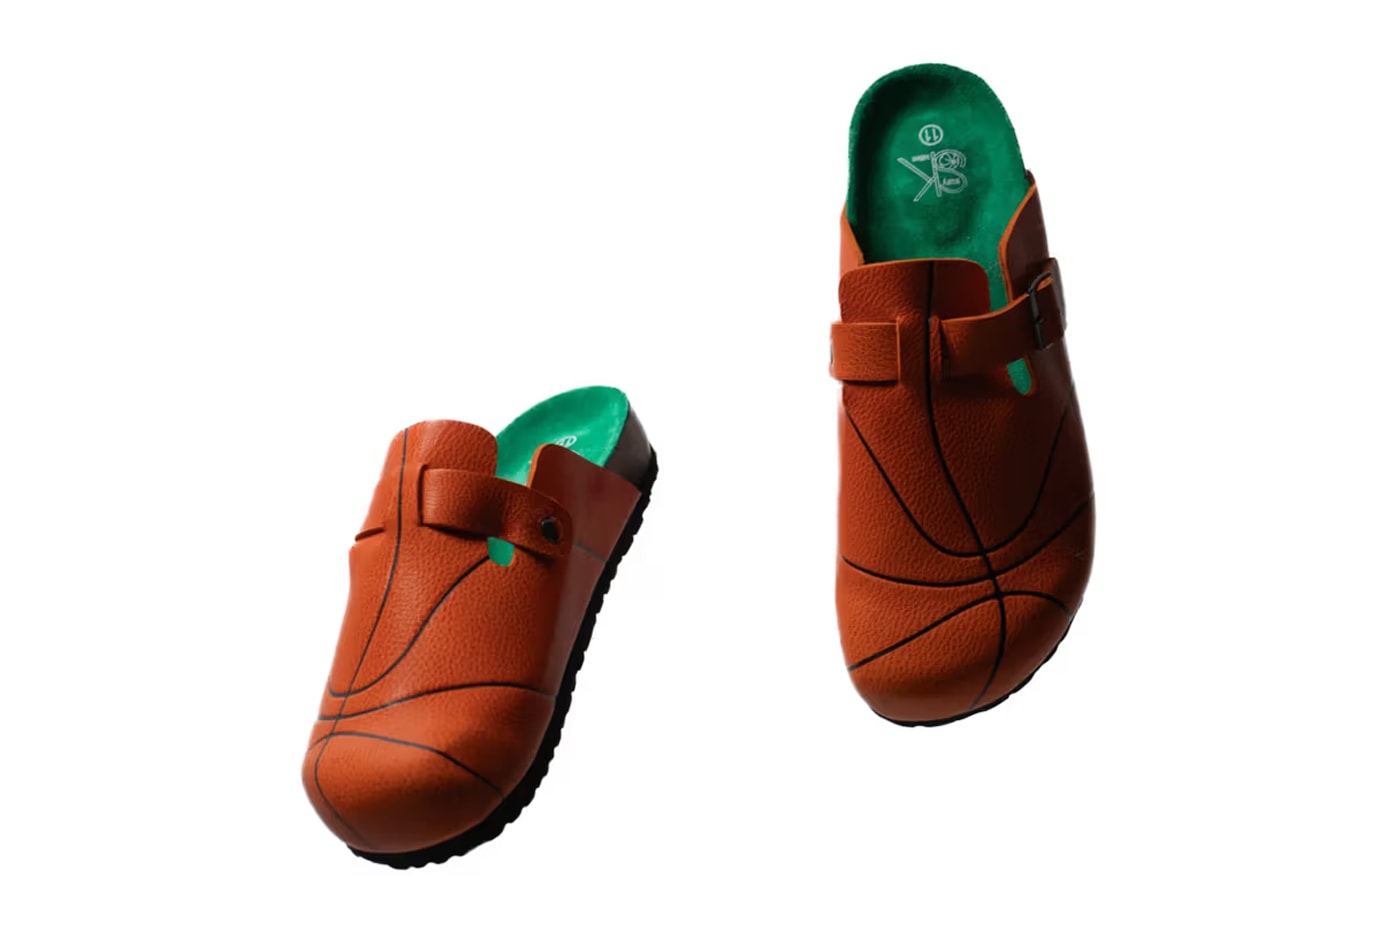 kaman clogs chris nba player homage leather upper shoe brand evan more jack herzog founders kid super senior designer pre order price